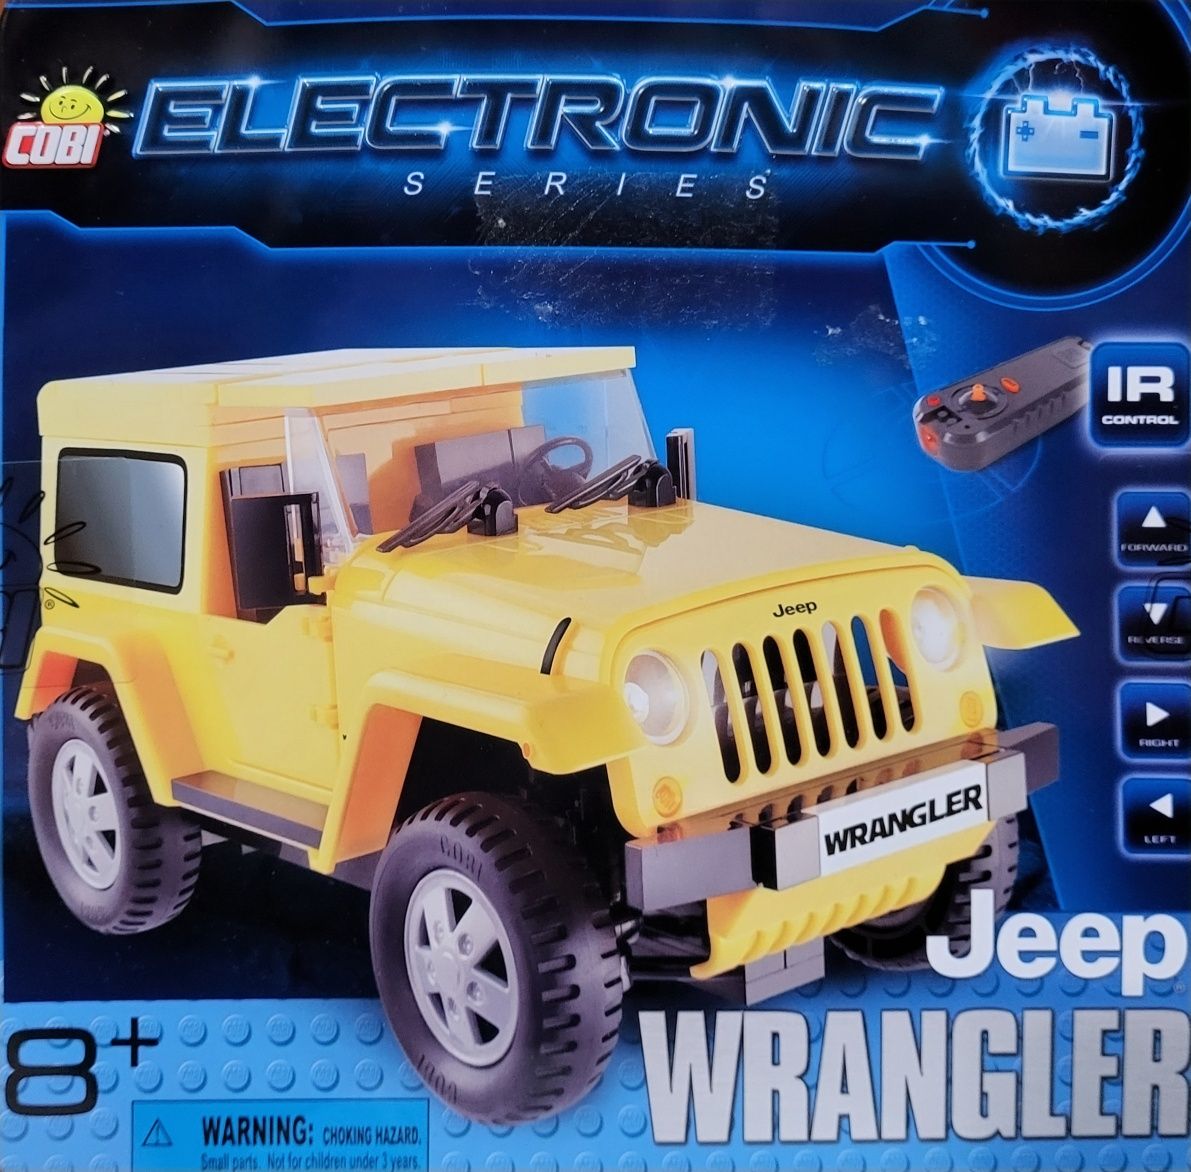 Cobi 21921 Jeep Wrangler/ Electronic series